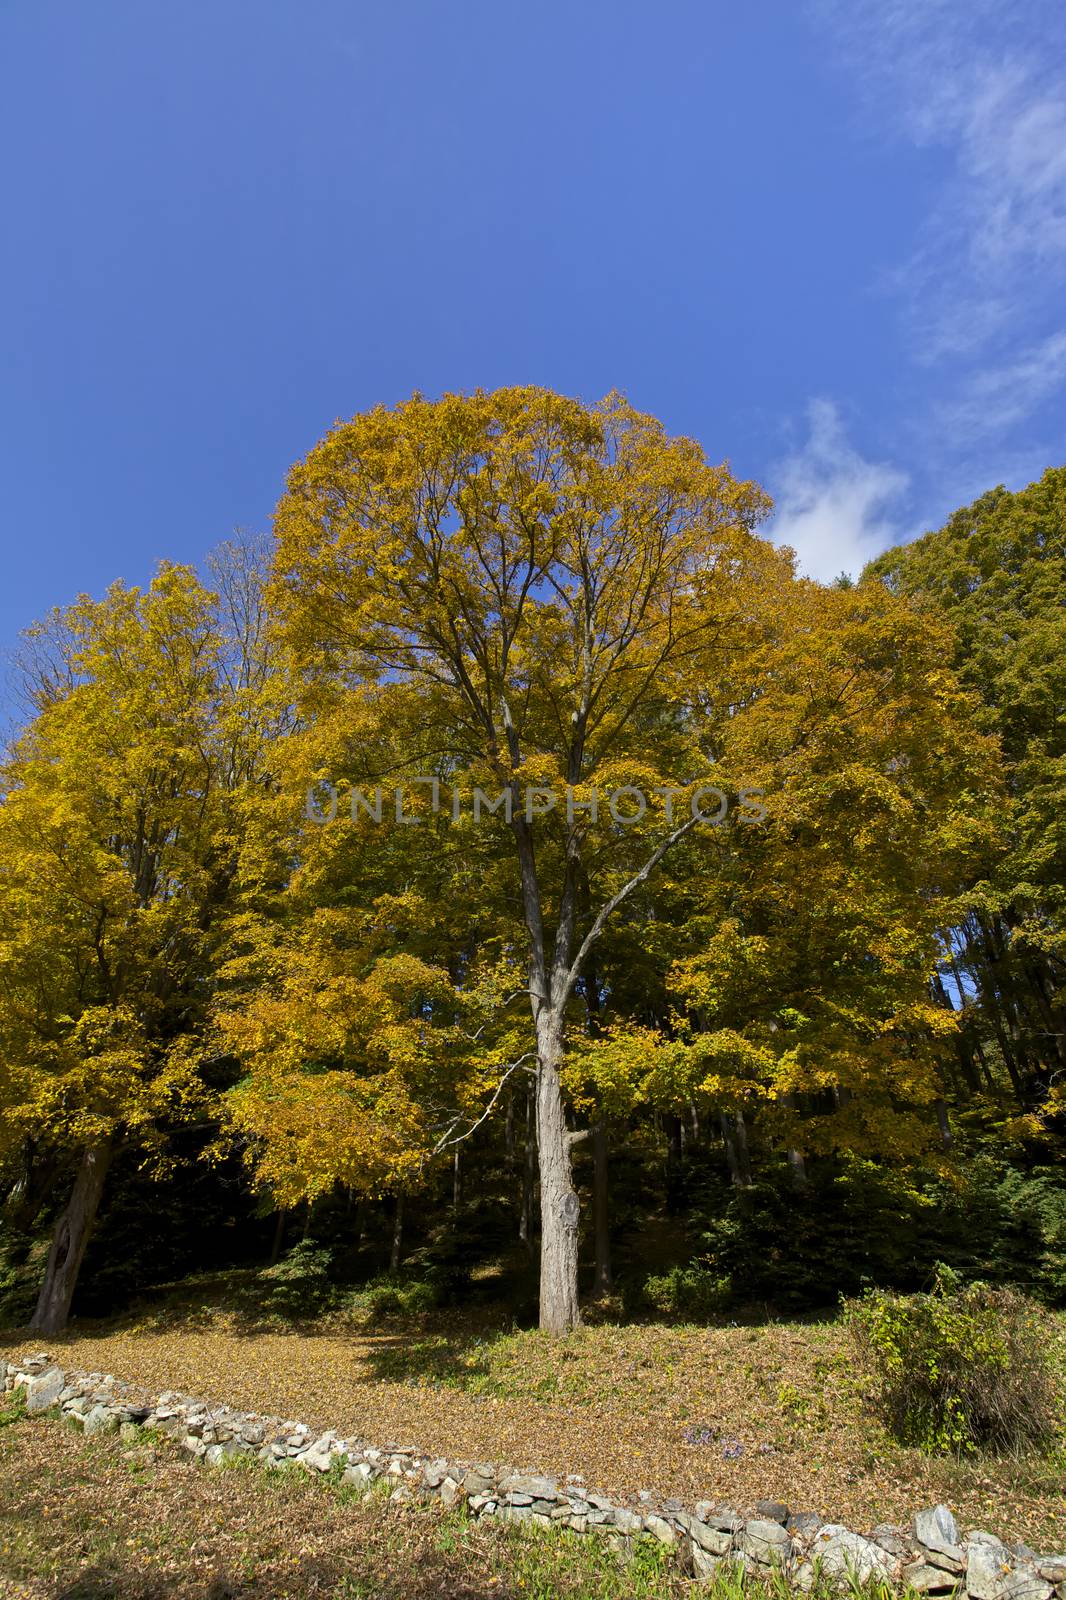 Tree Autumn, Fall foliage in New England, USA